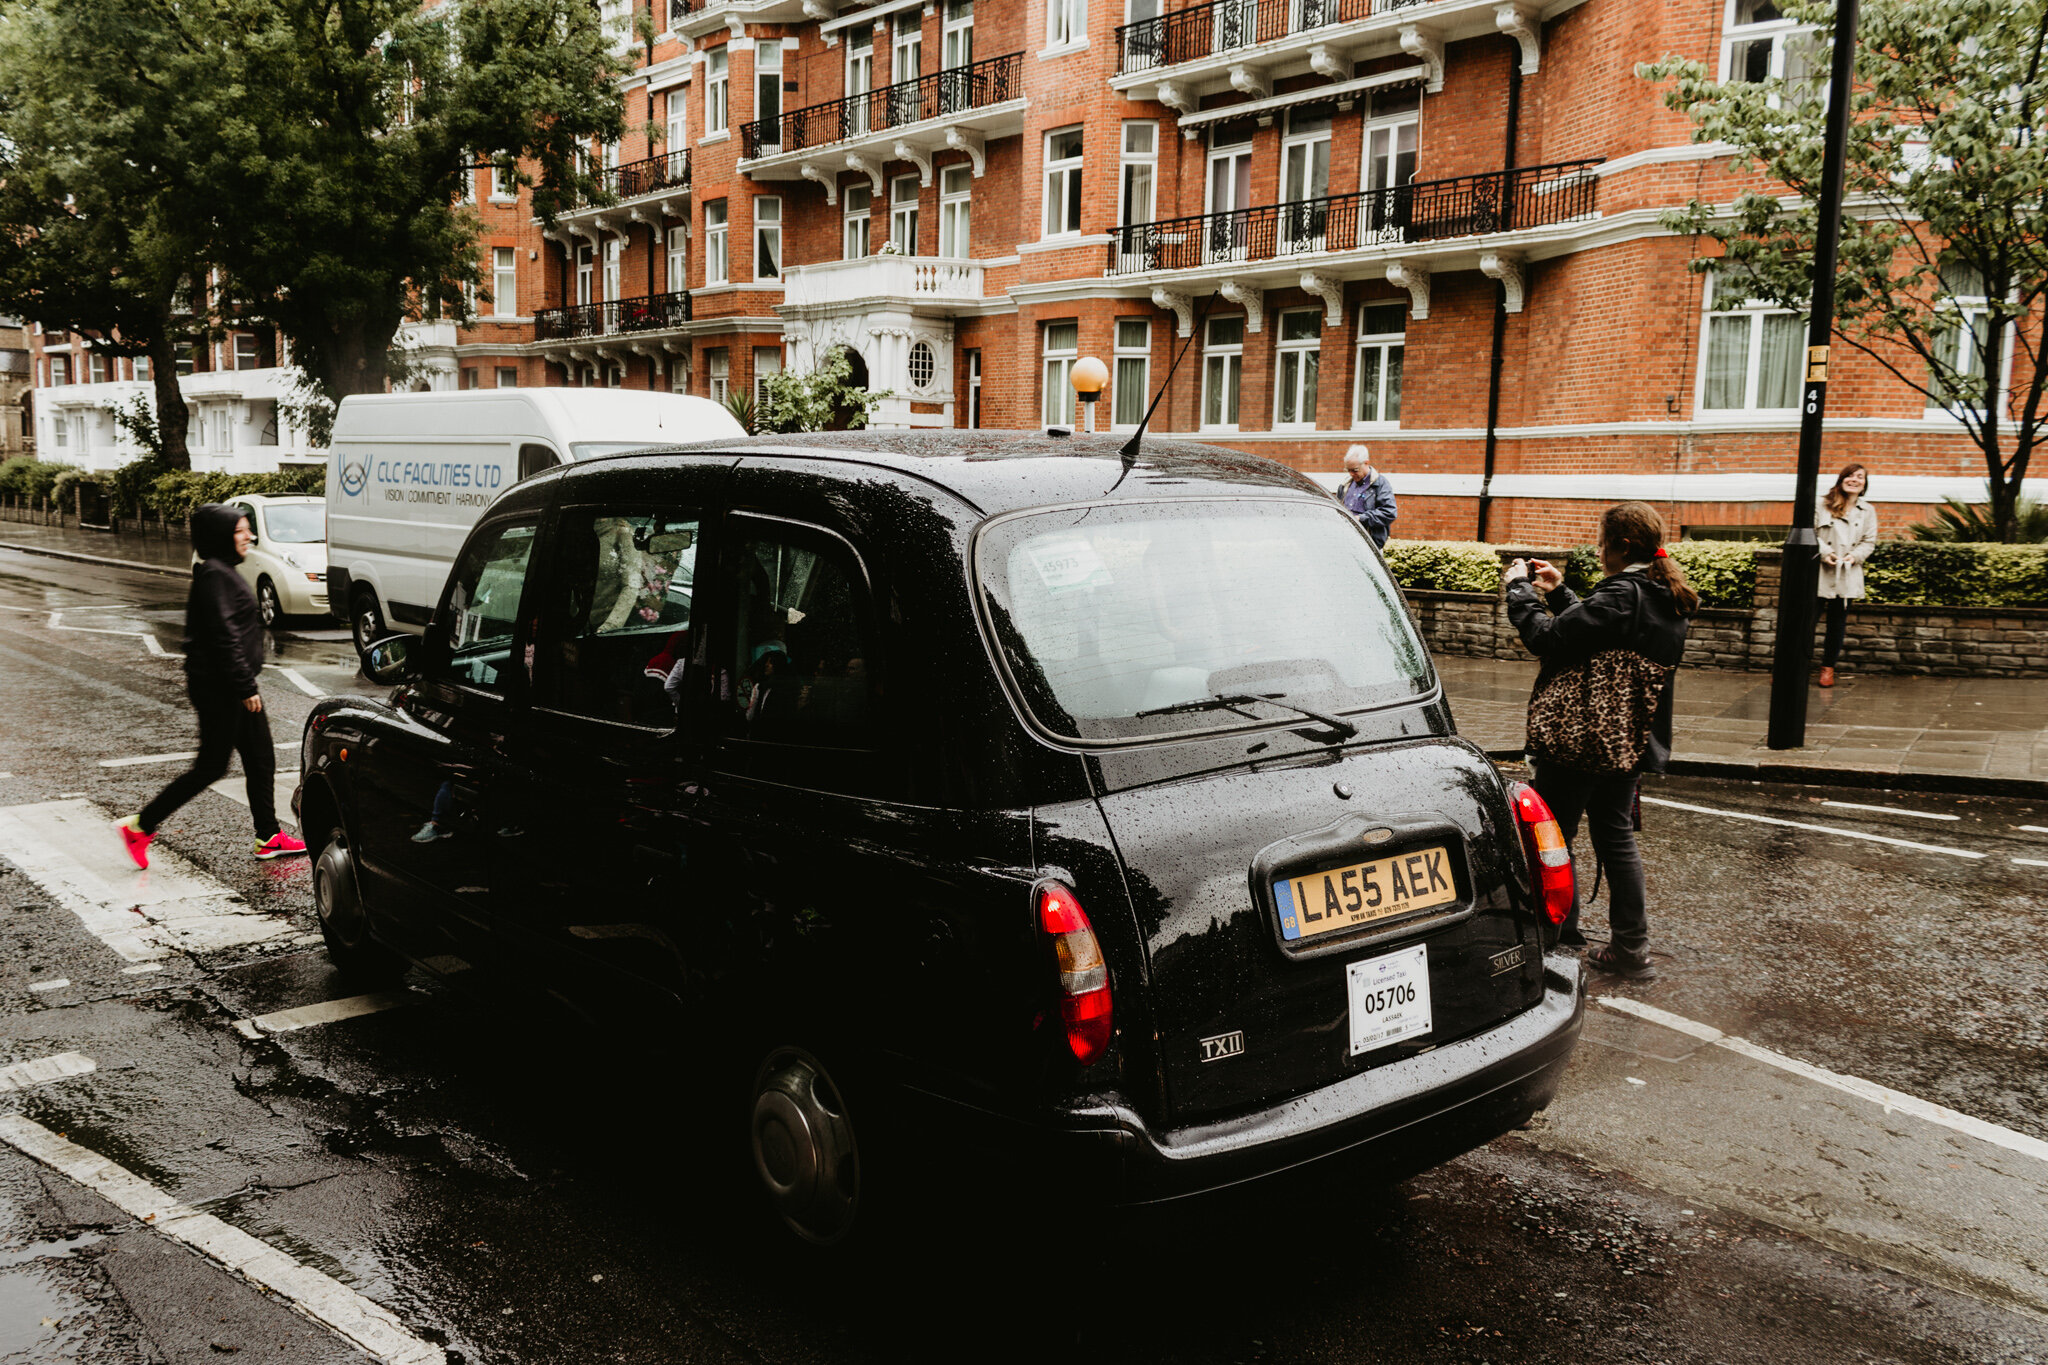 black cabs in London